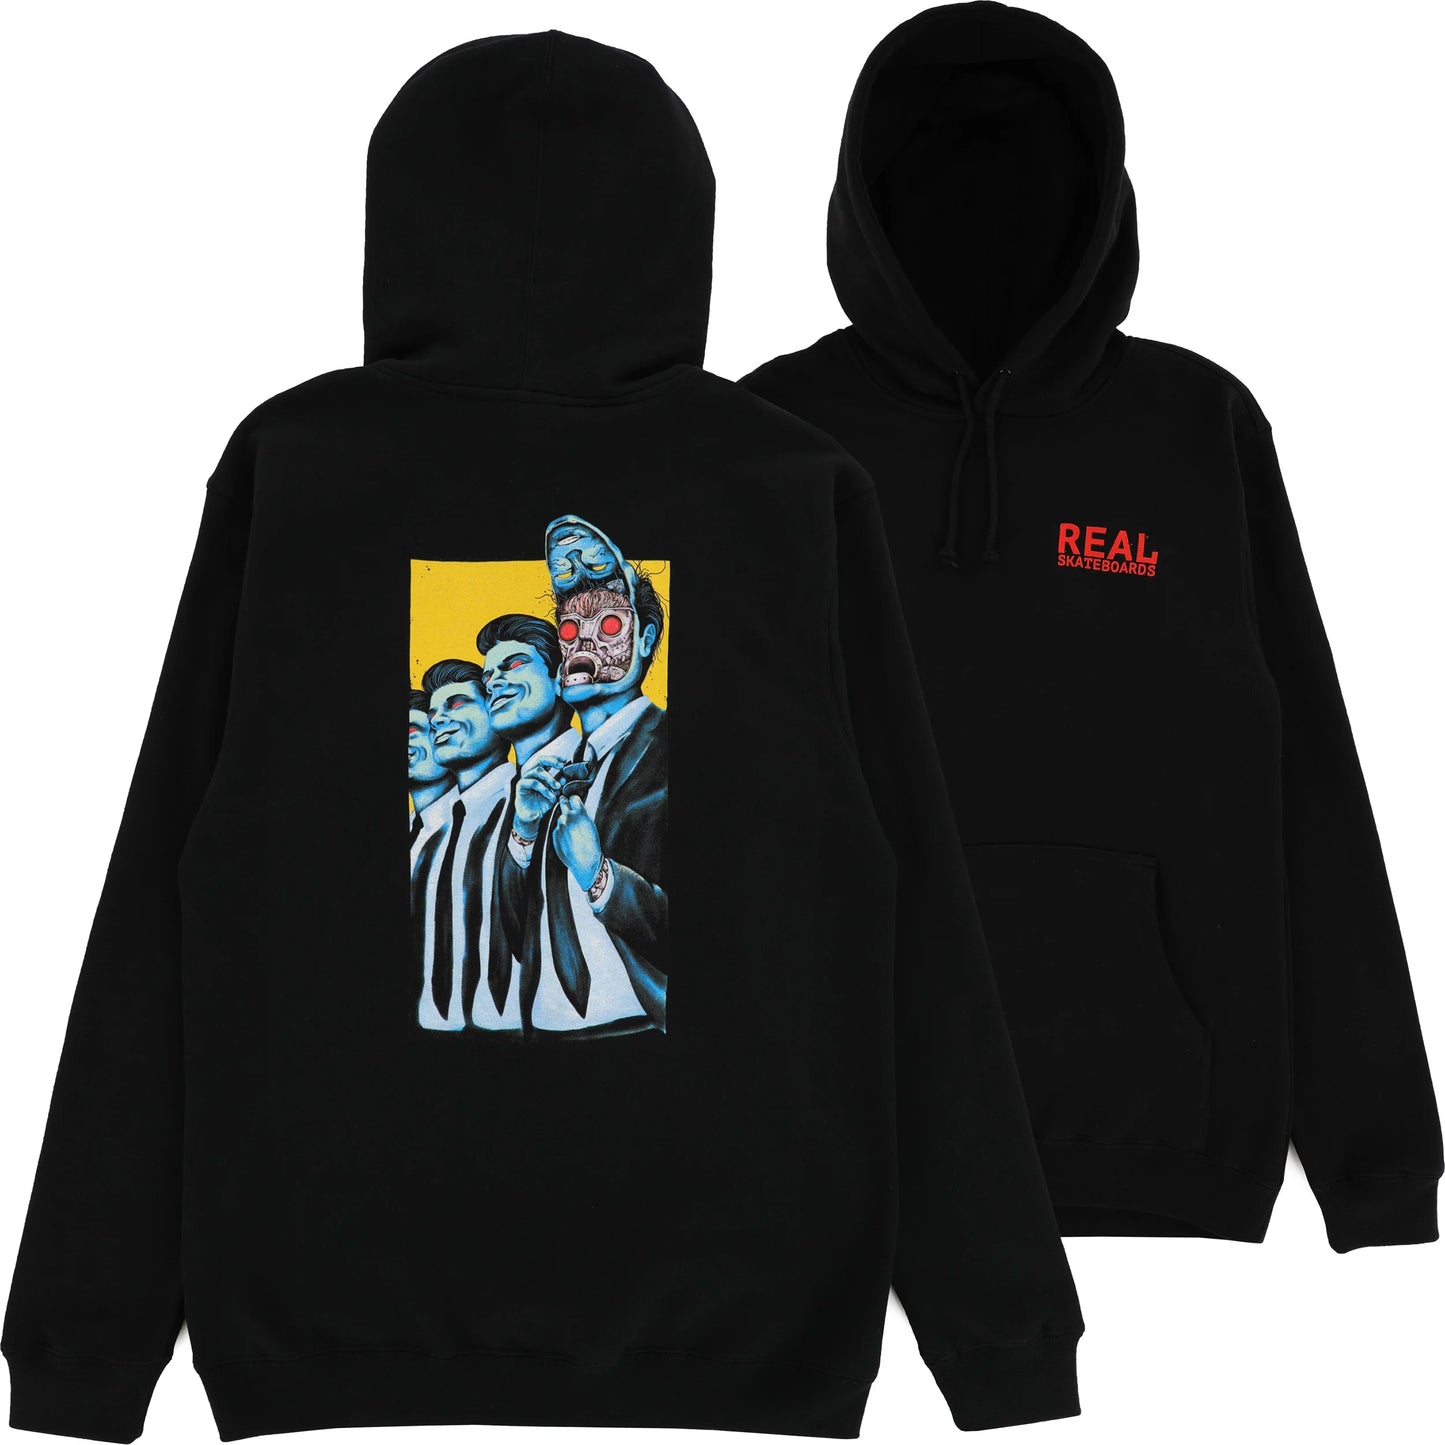 Real | Technology Pullover Sweatshirt - Black